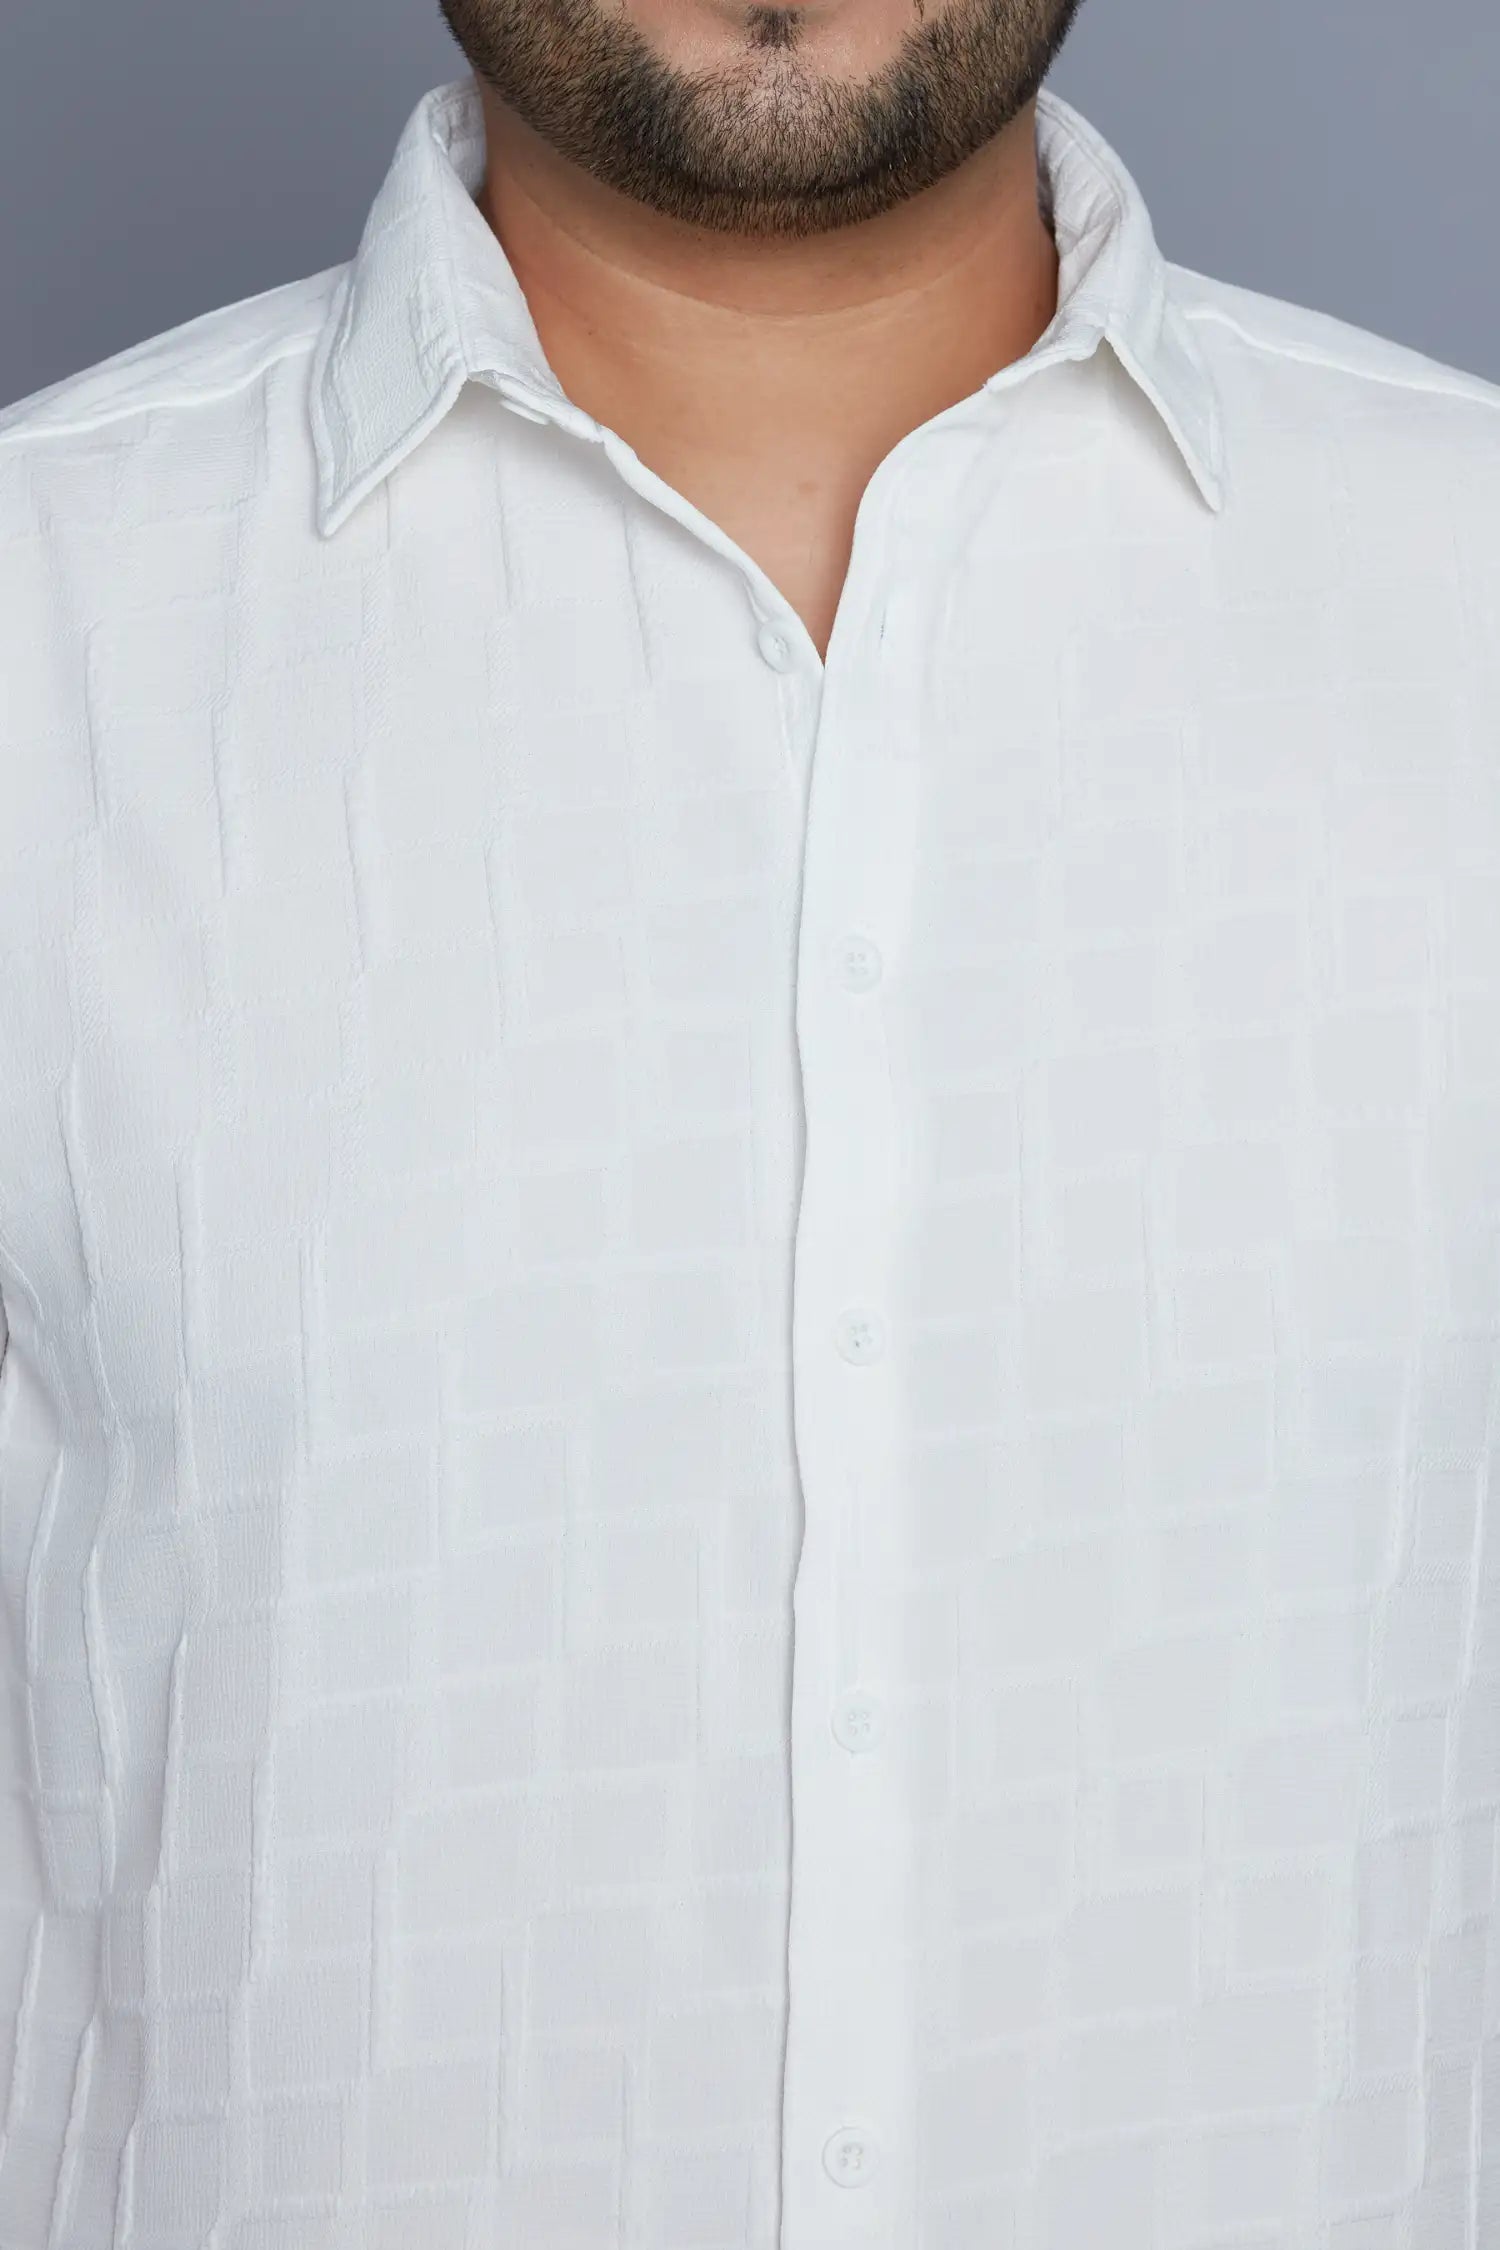 White Plus Size Shirt for Men